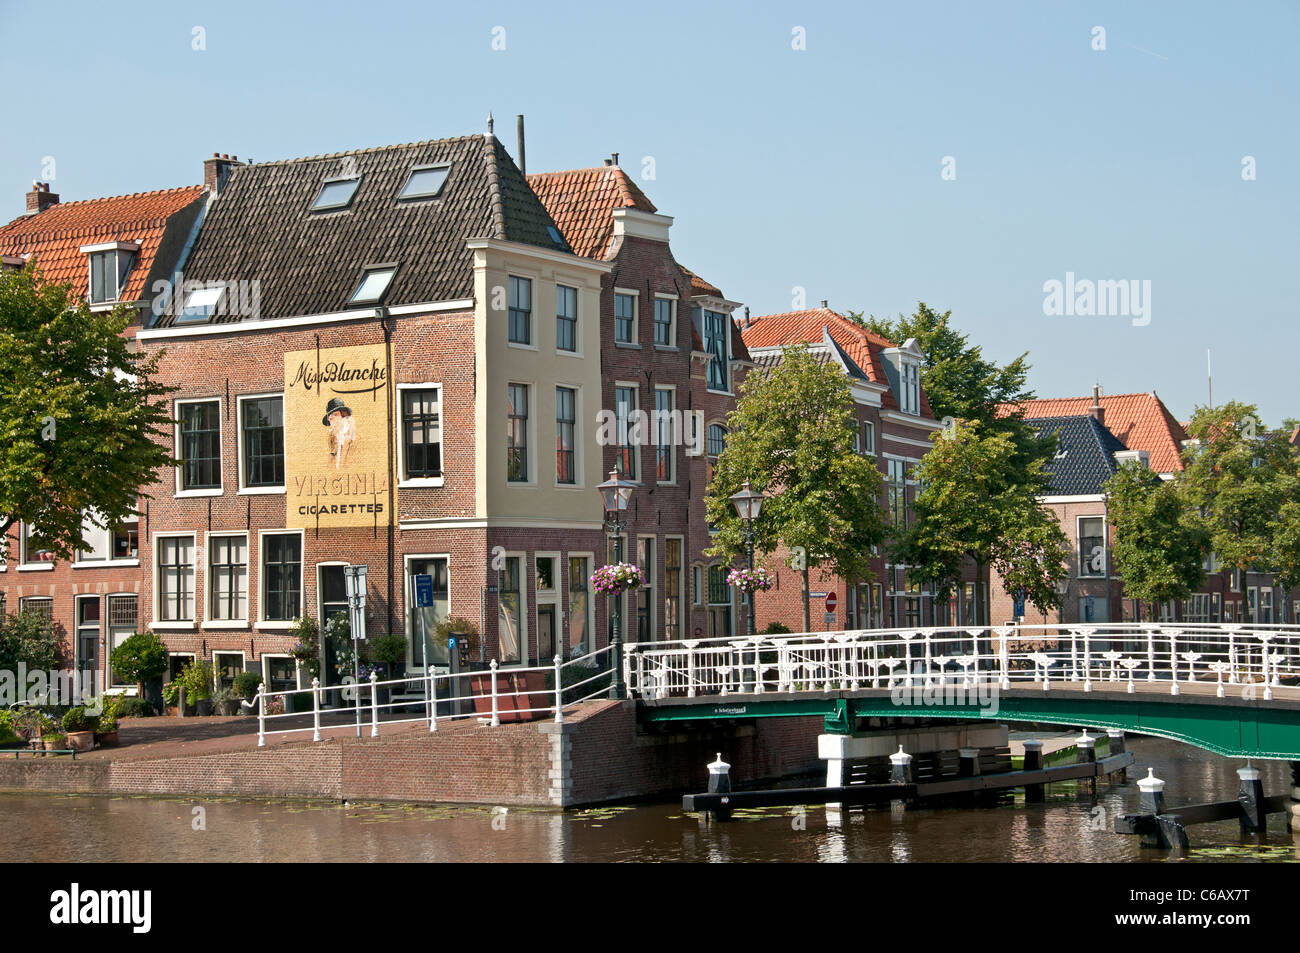 Leiden Netherlands Herengracht Canal Oude Rijn Holland Miss Blanche Cigarettes Stock Photo